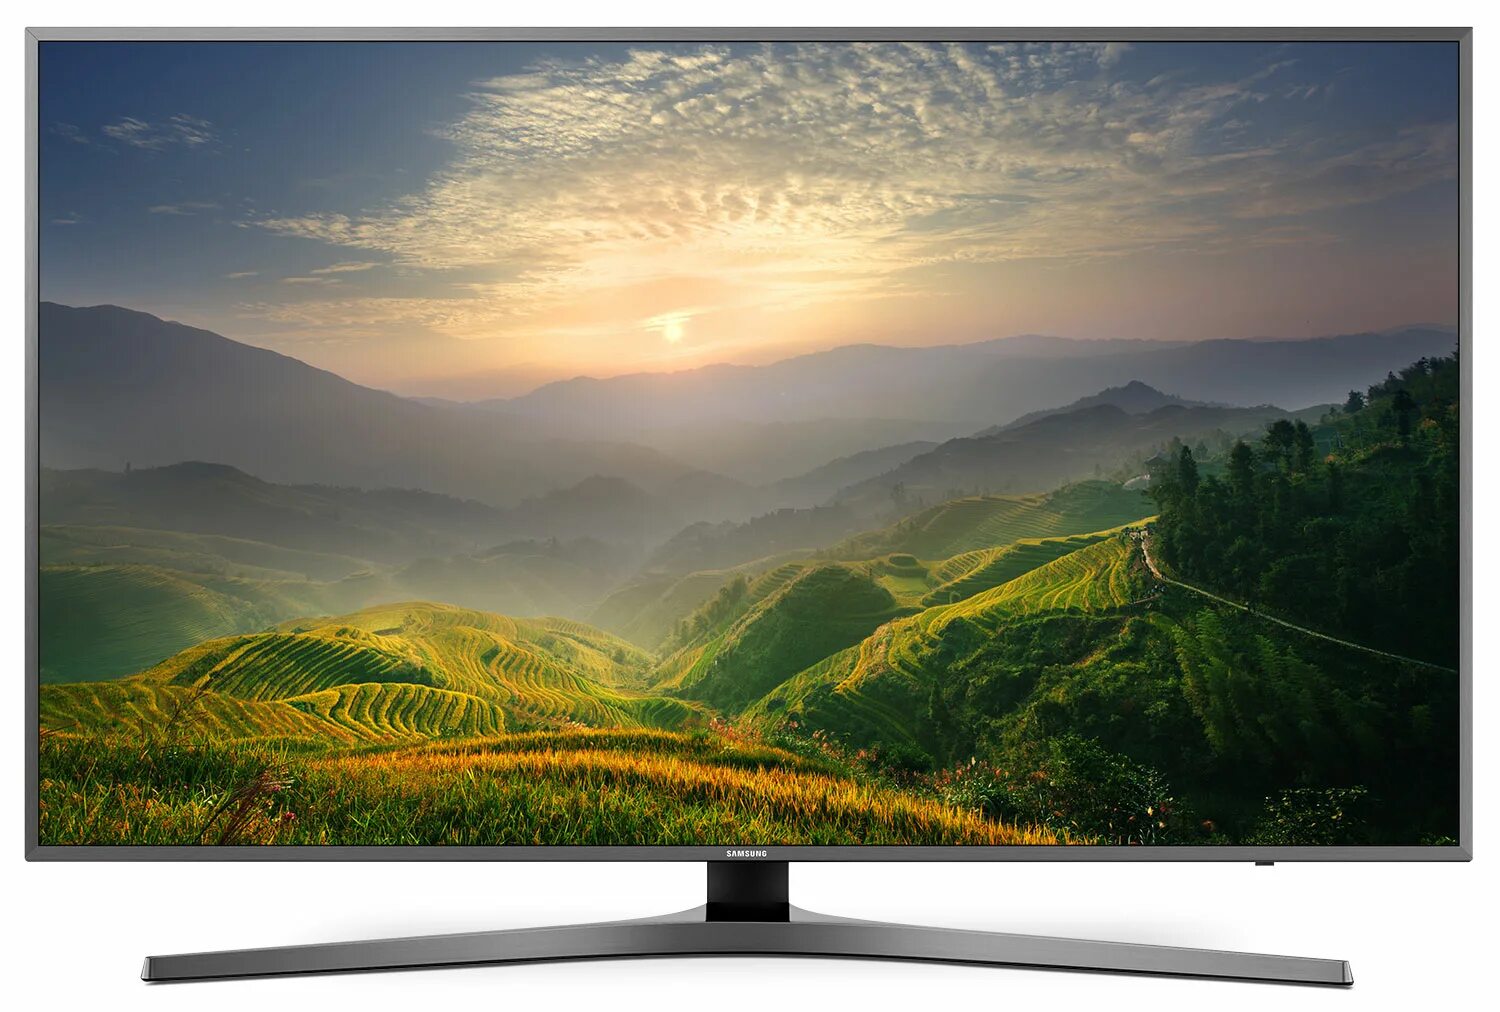 Samsung Smart TV 40. Samsung 32m9000 телевизор. Samsung Smart TV 32. Ue32t5300au Smart TV. Белые телевизоры 32 дюйма смарт